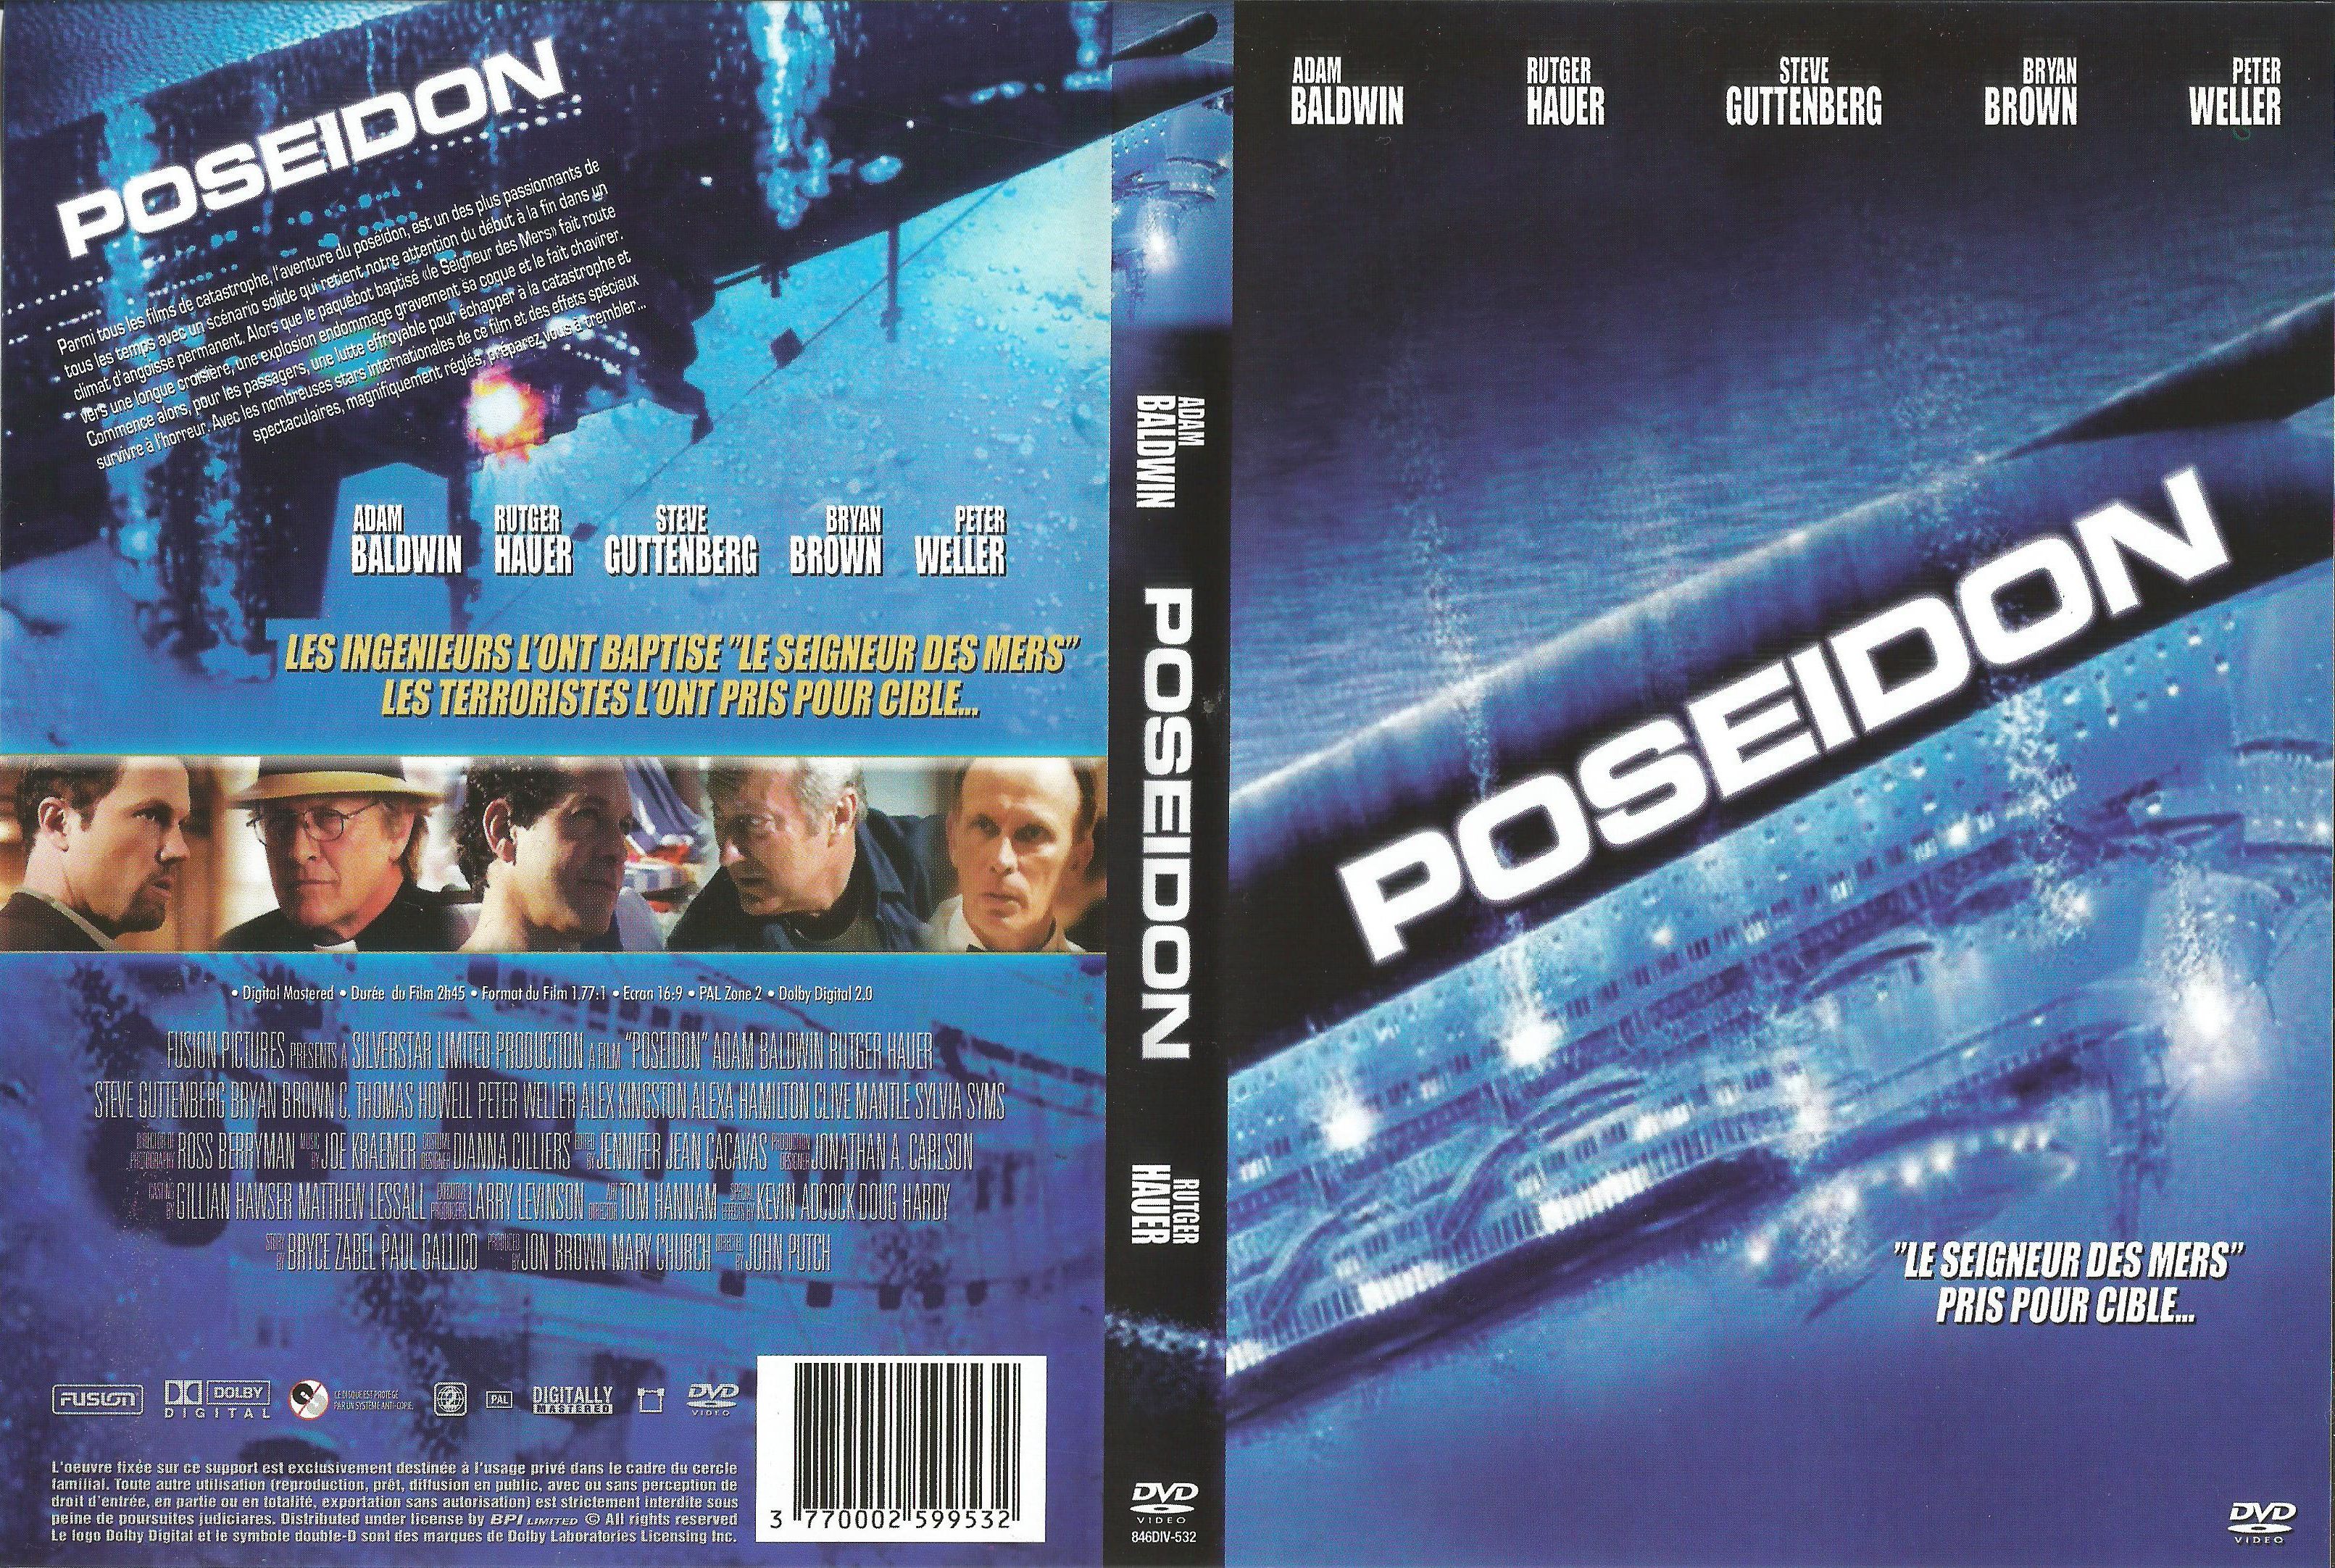 Jaquette DVD Poseidon (2005)